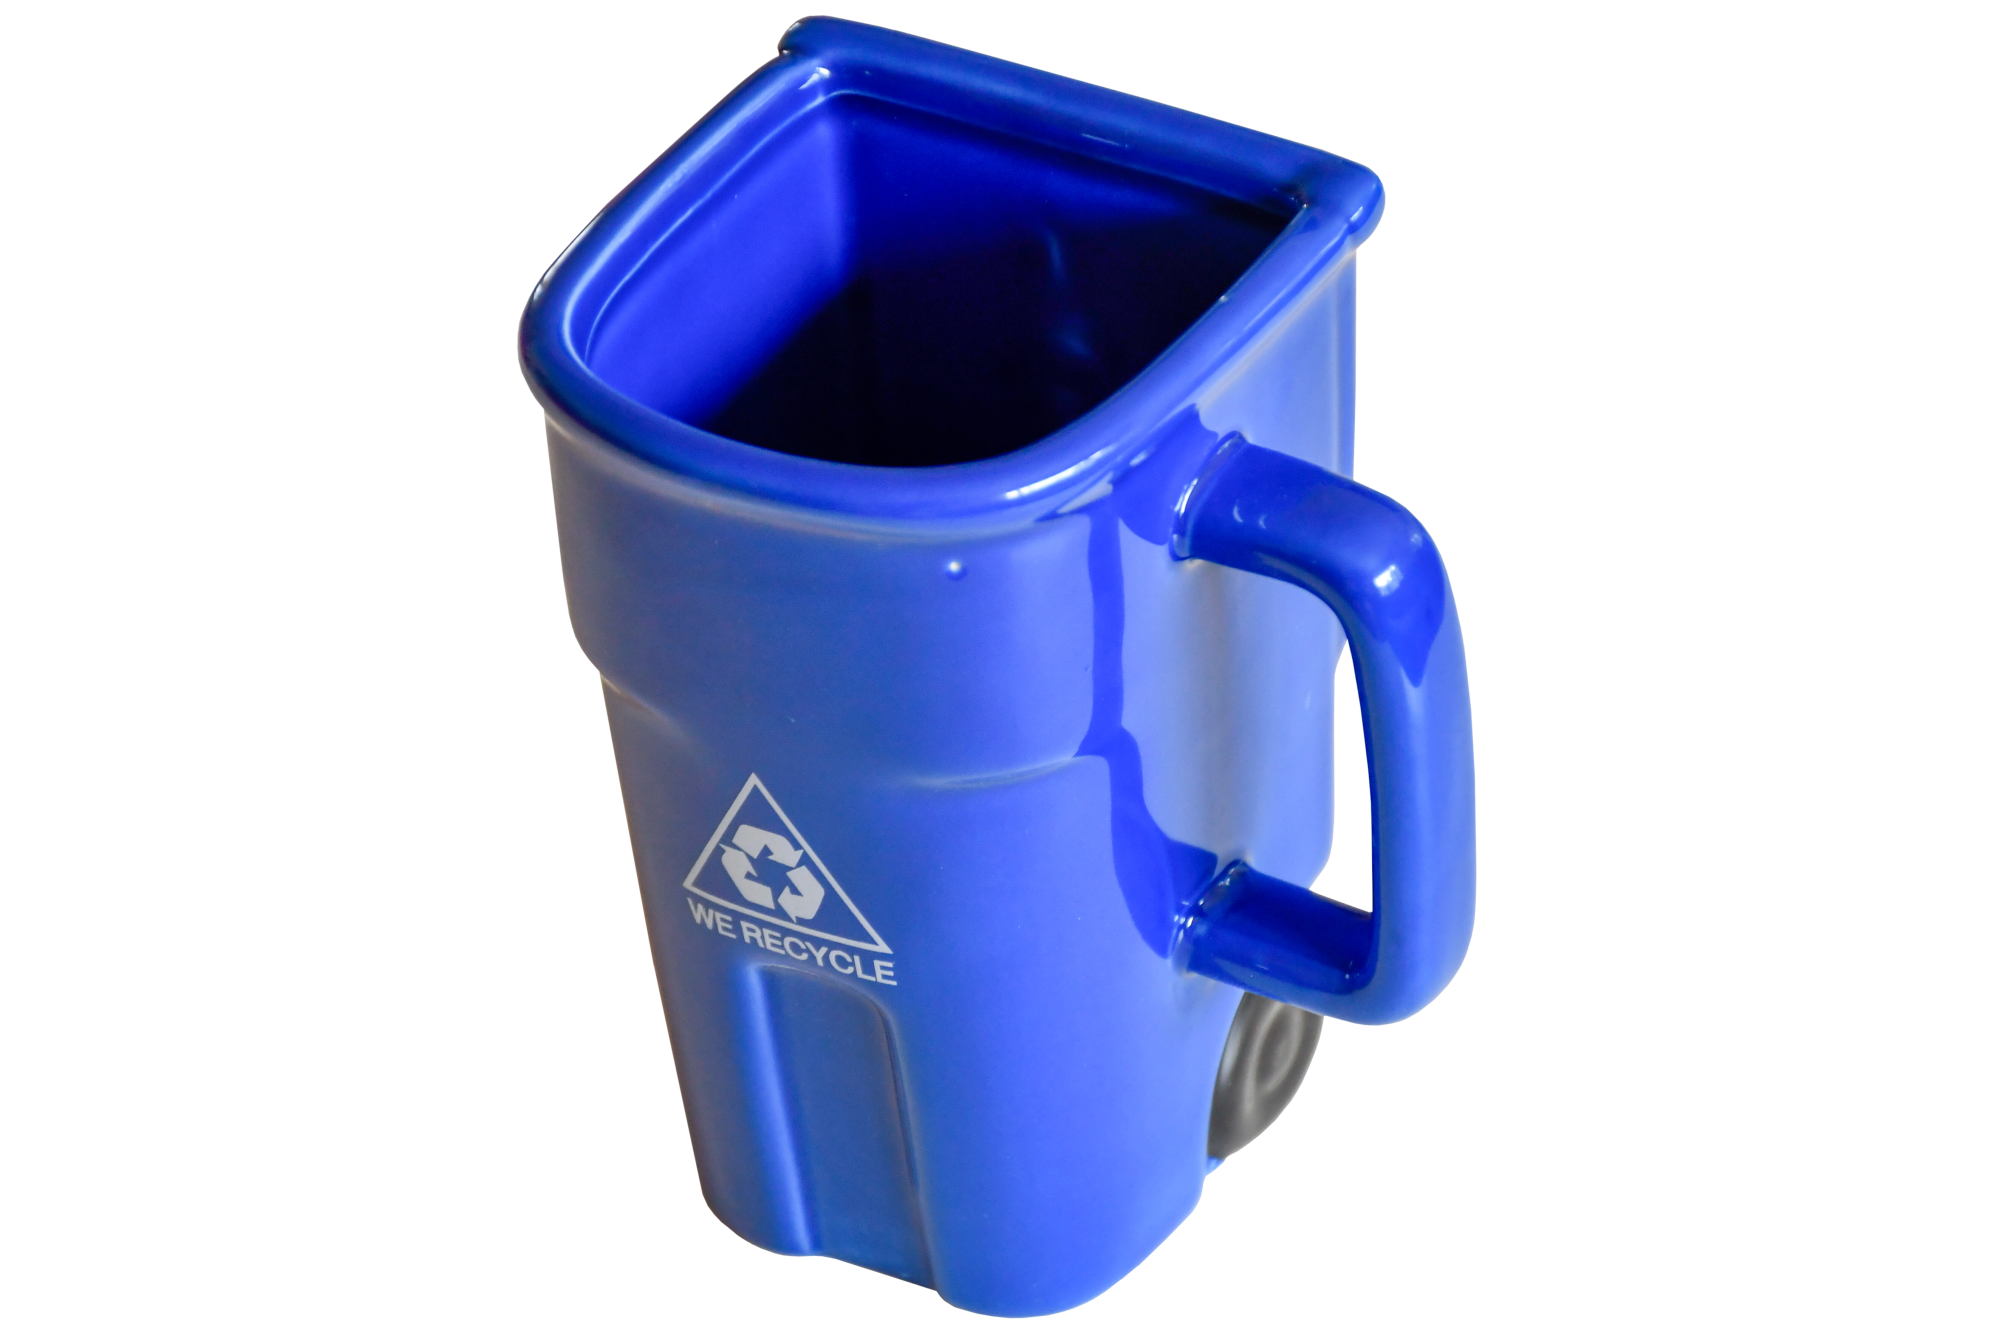 BigMouth coffee mug in the shape of a blue recycle bin